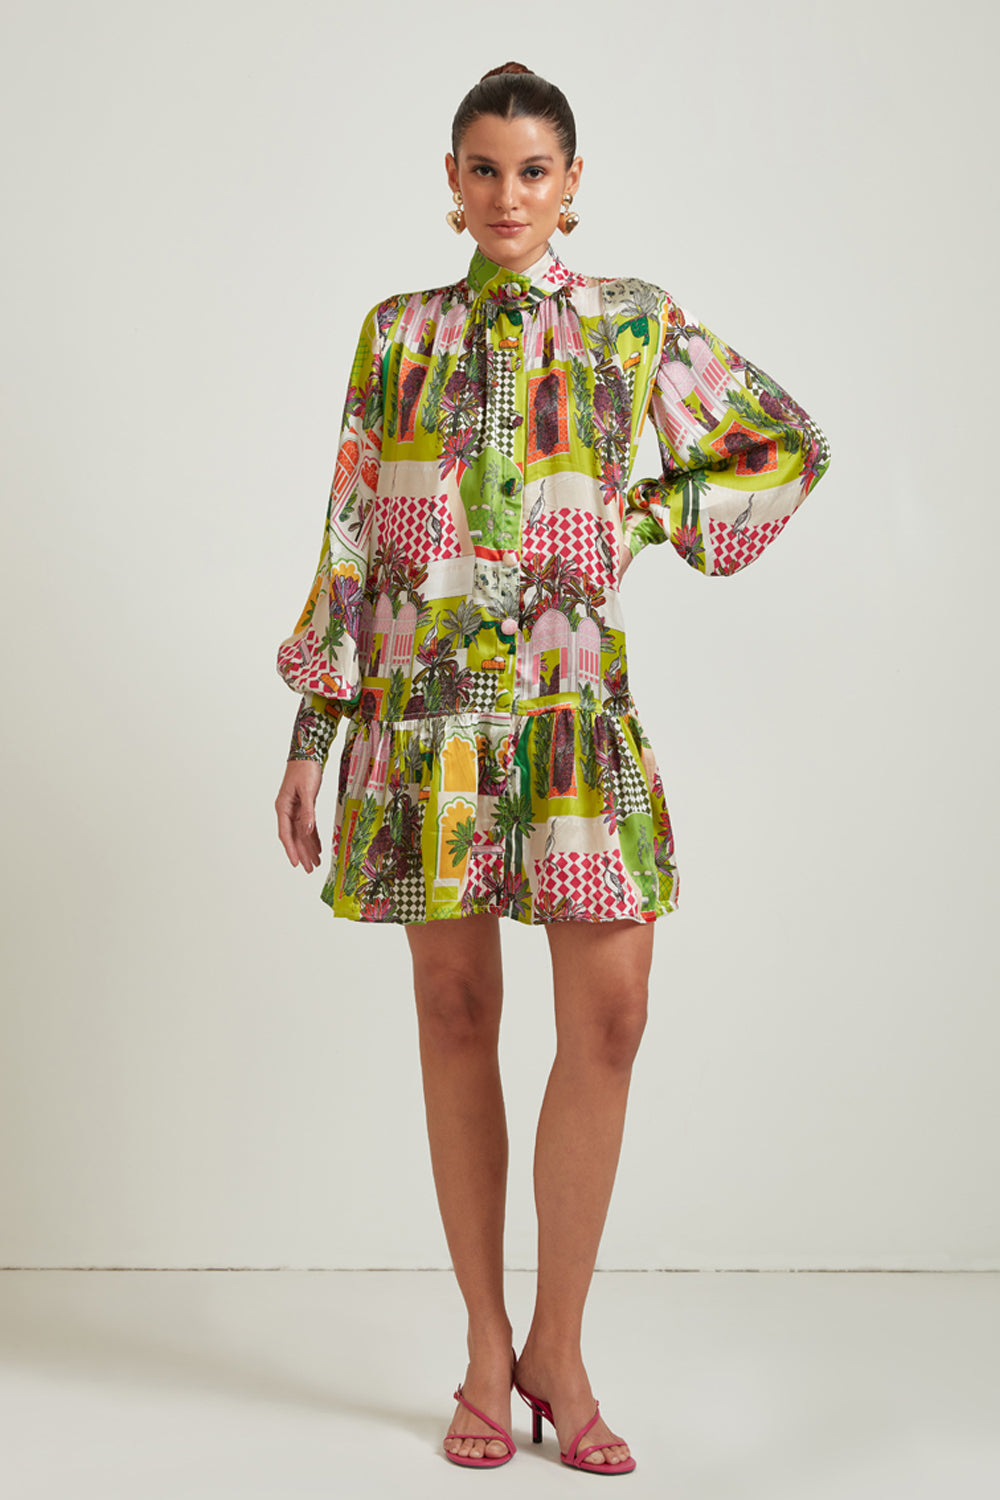 Kiwi Colada Short Dress